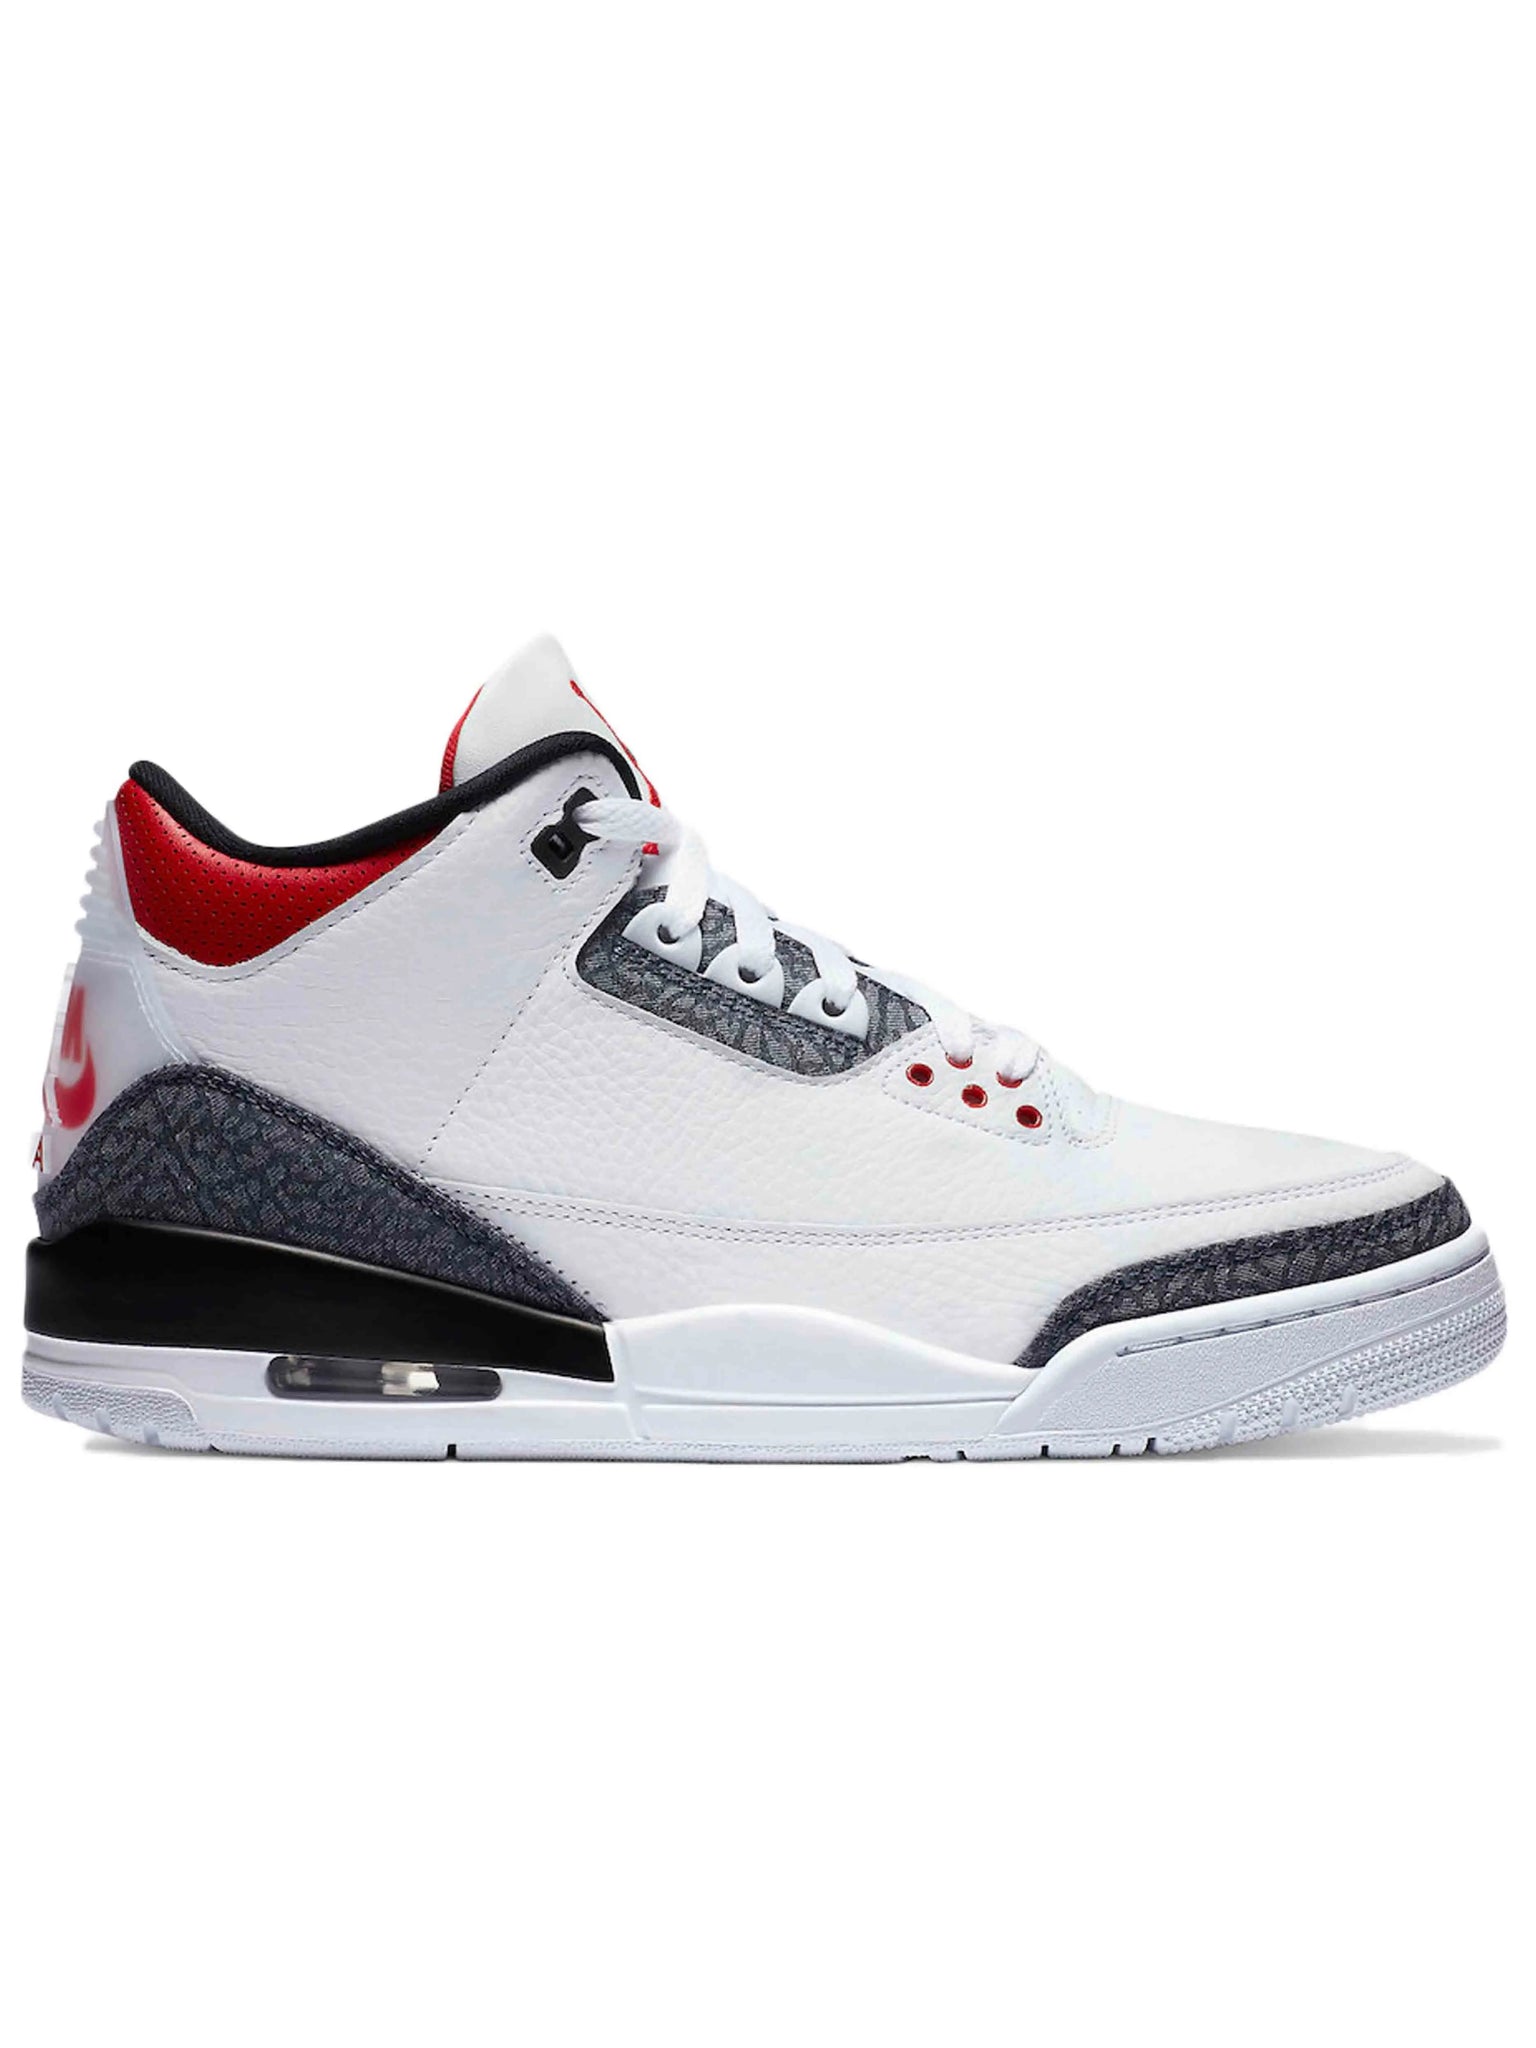 Nike Air Jordan 3 Retro SE Fire Red Denim Jordan Brand